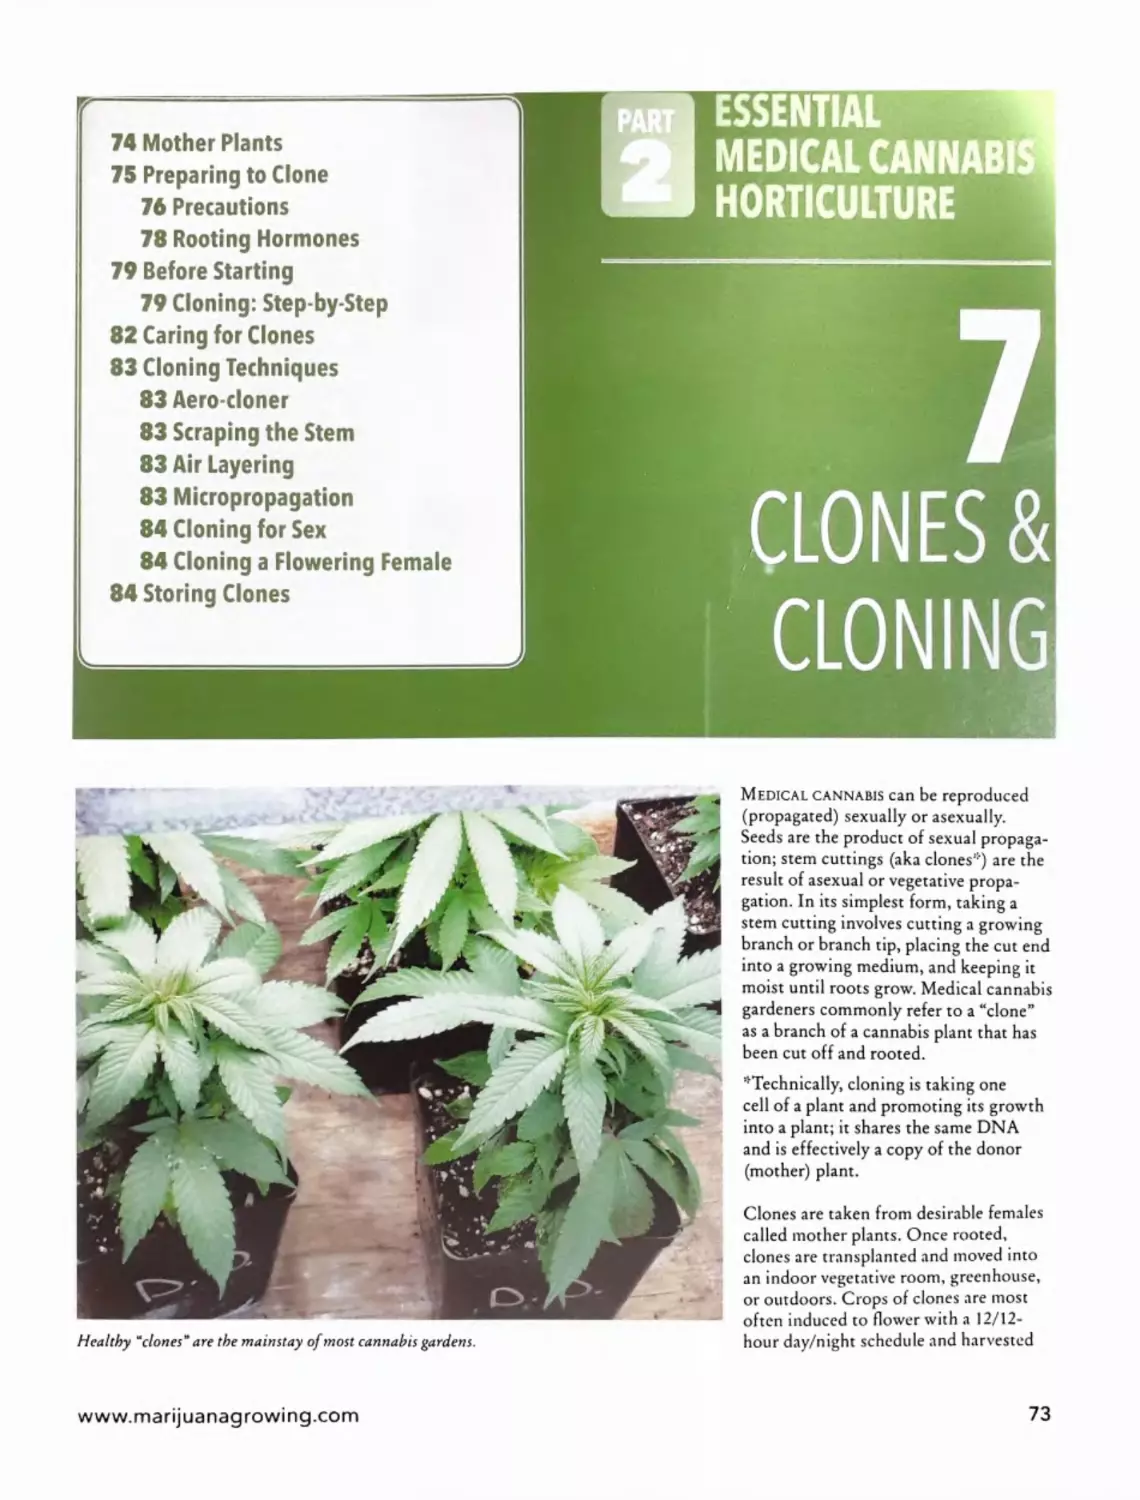 Chapter 7 - Clones & Cloning